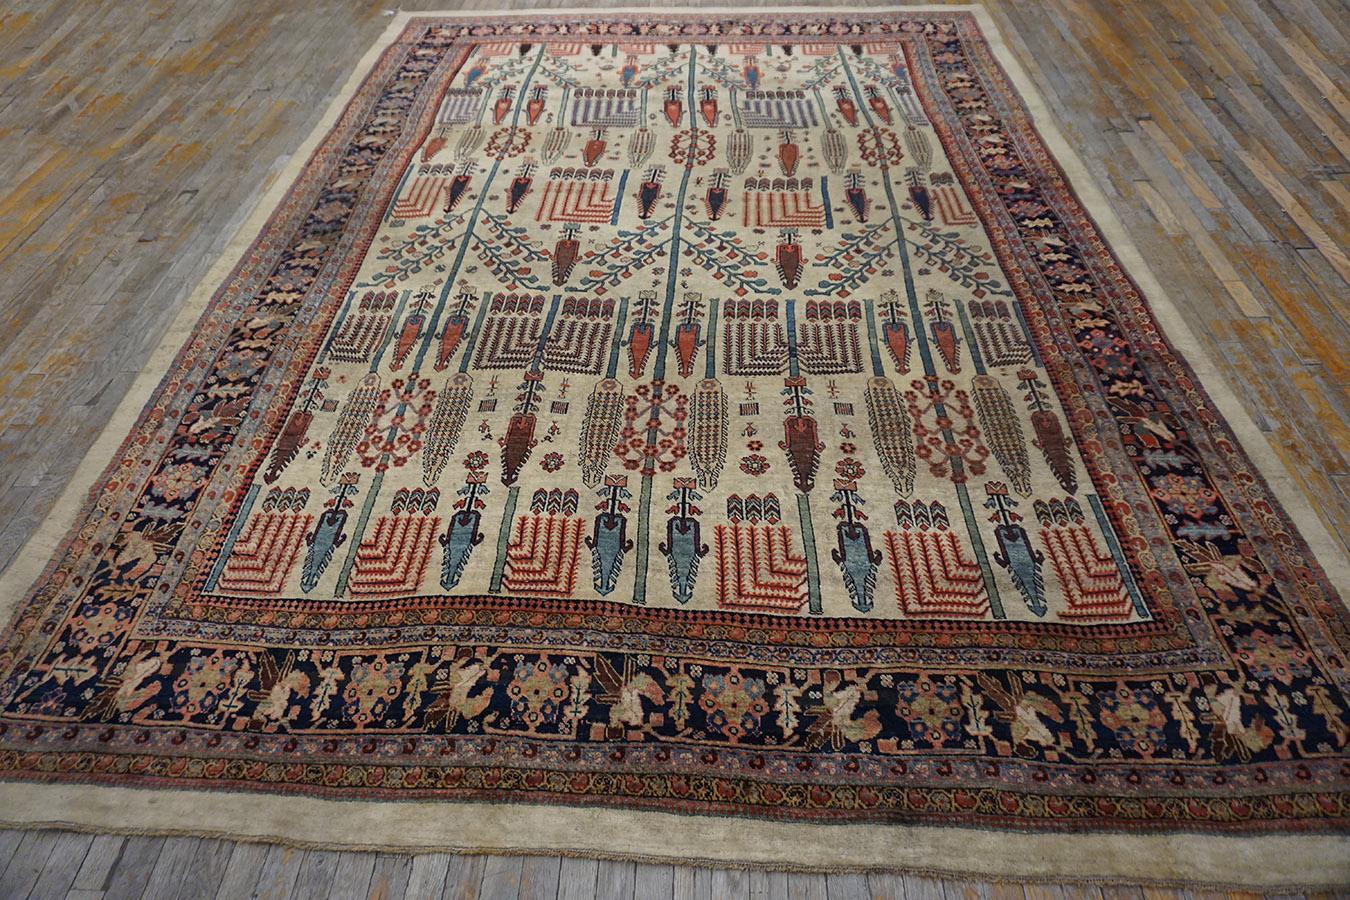 19th Century W. Persian Bijar Carpet with Bid Majnoon Design 
8'9